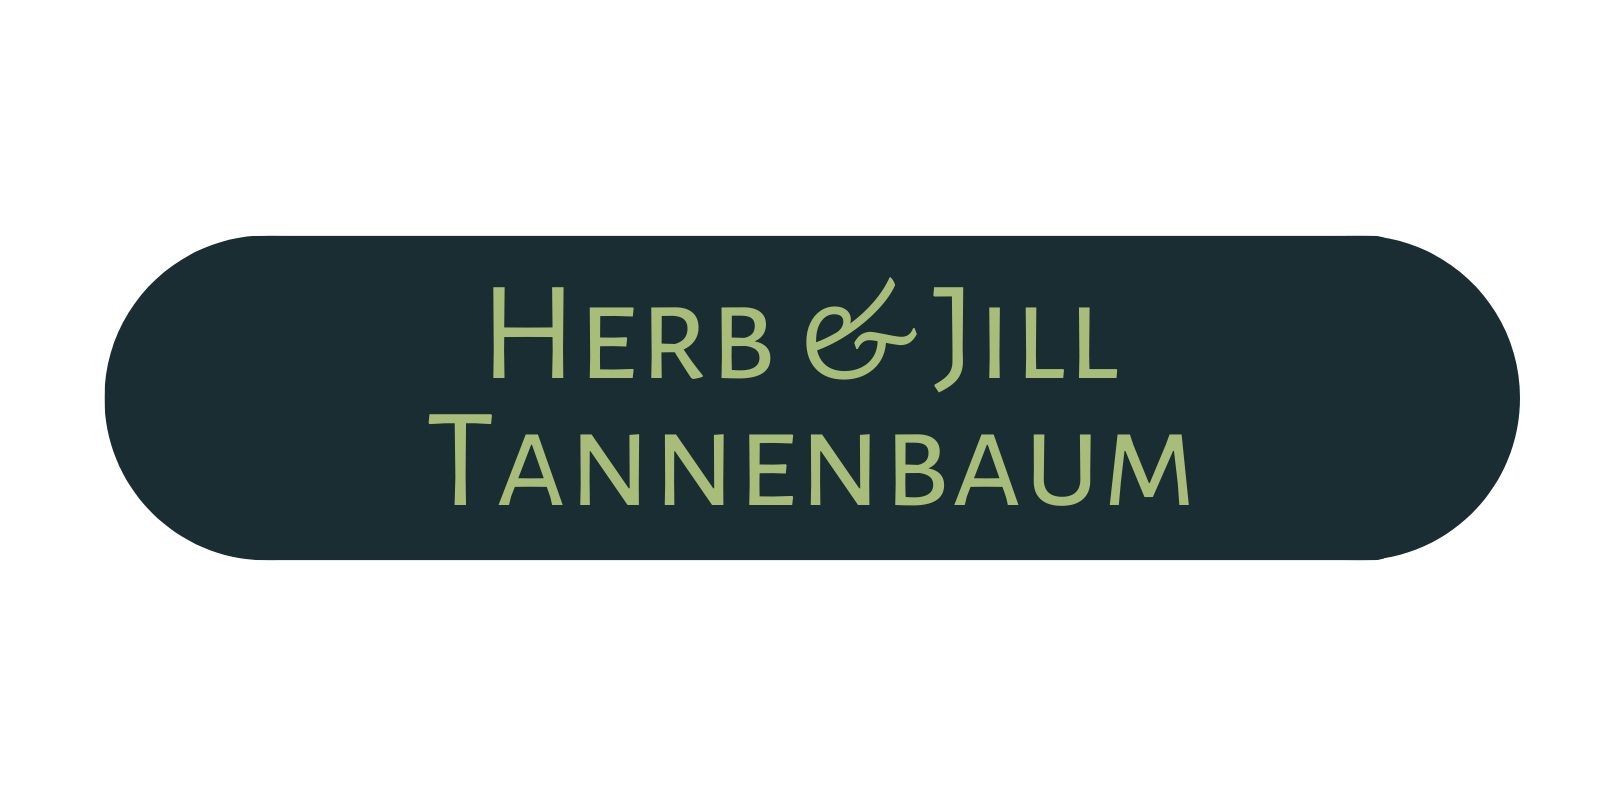 Herb & Jill Tannenbaum